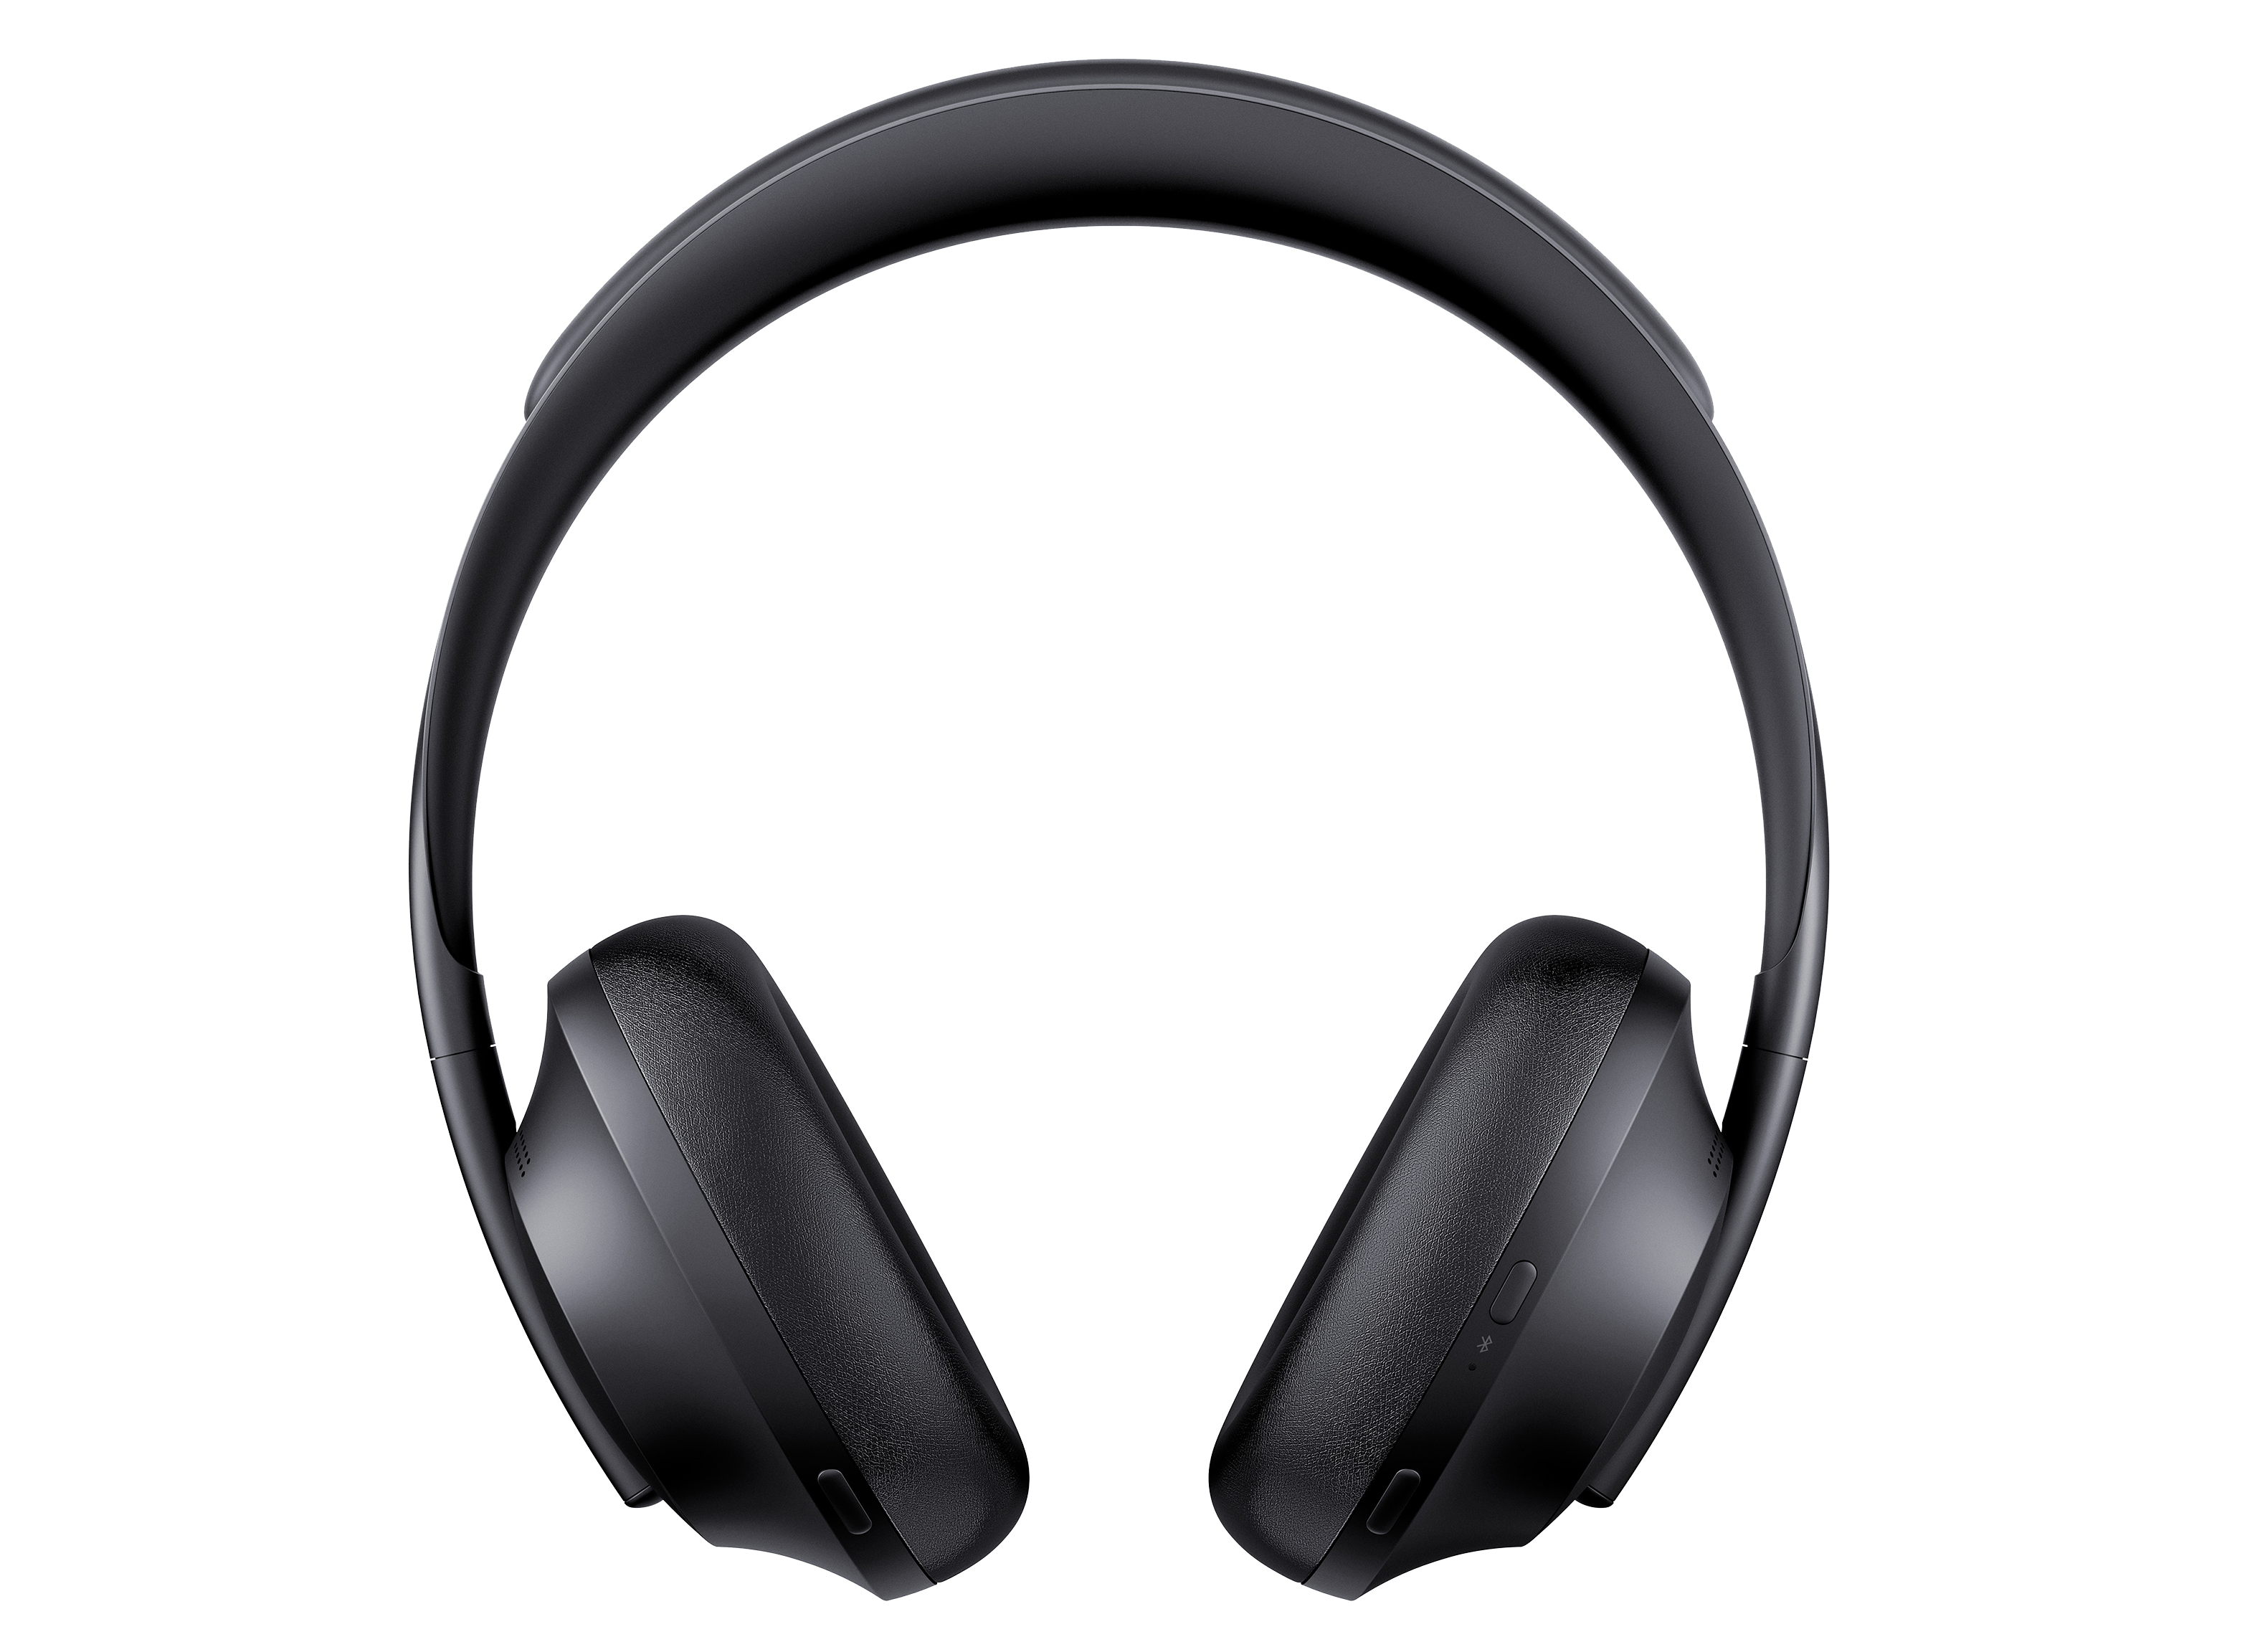 estera papi Vaciar la basura Bose Noise Cancelling Headphones 700 Headphone Review - Consumer Reports